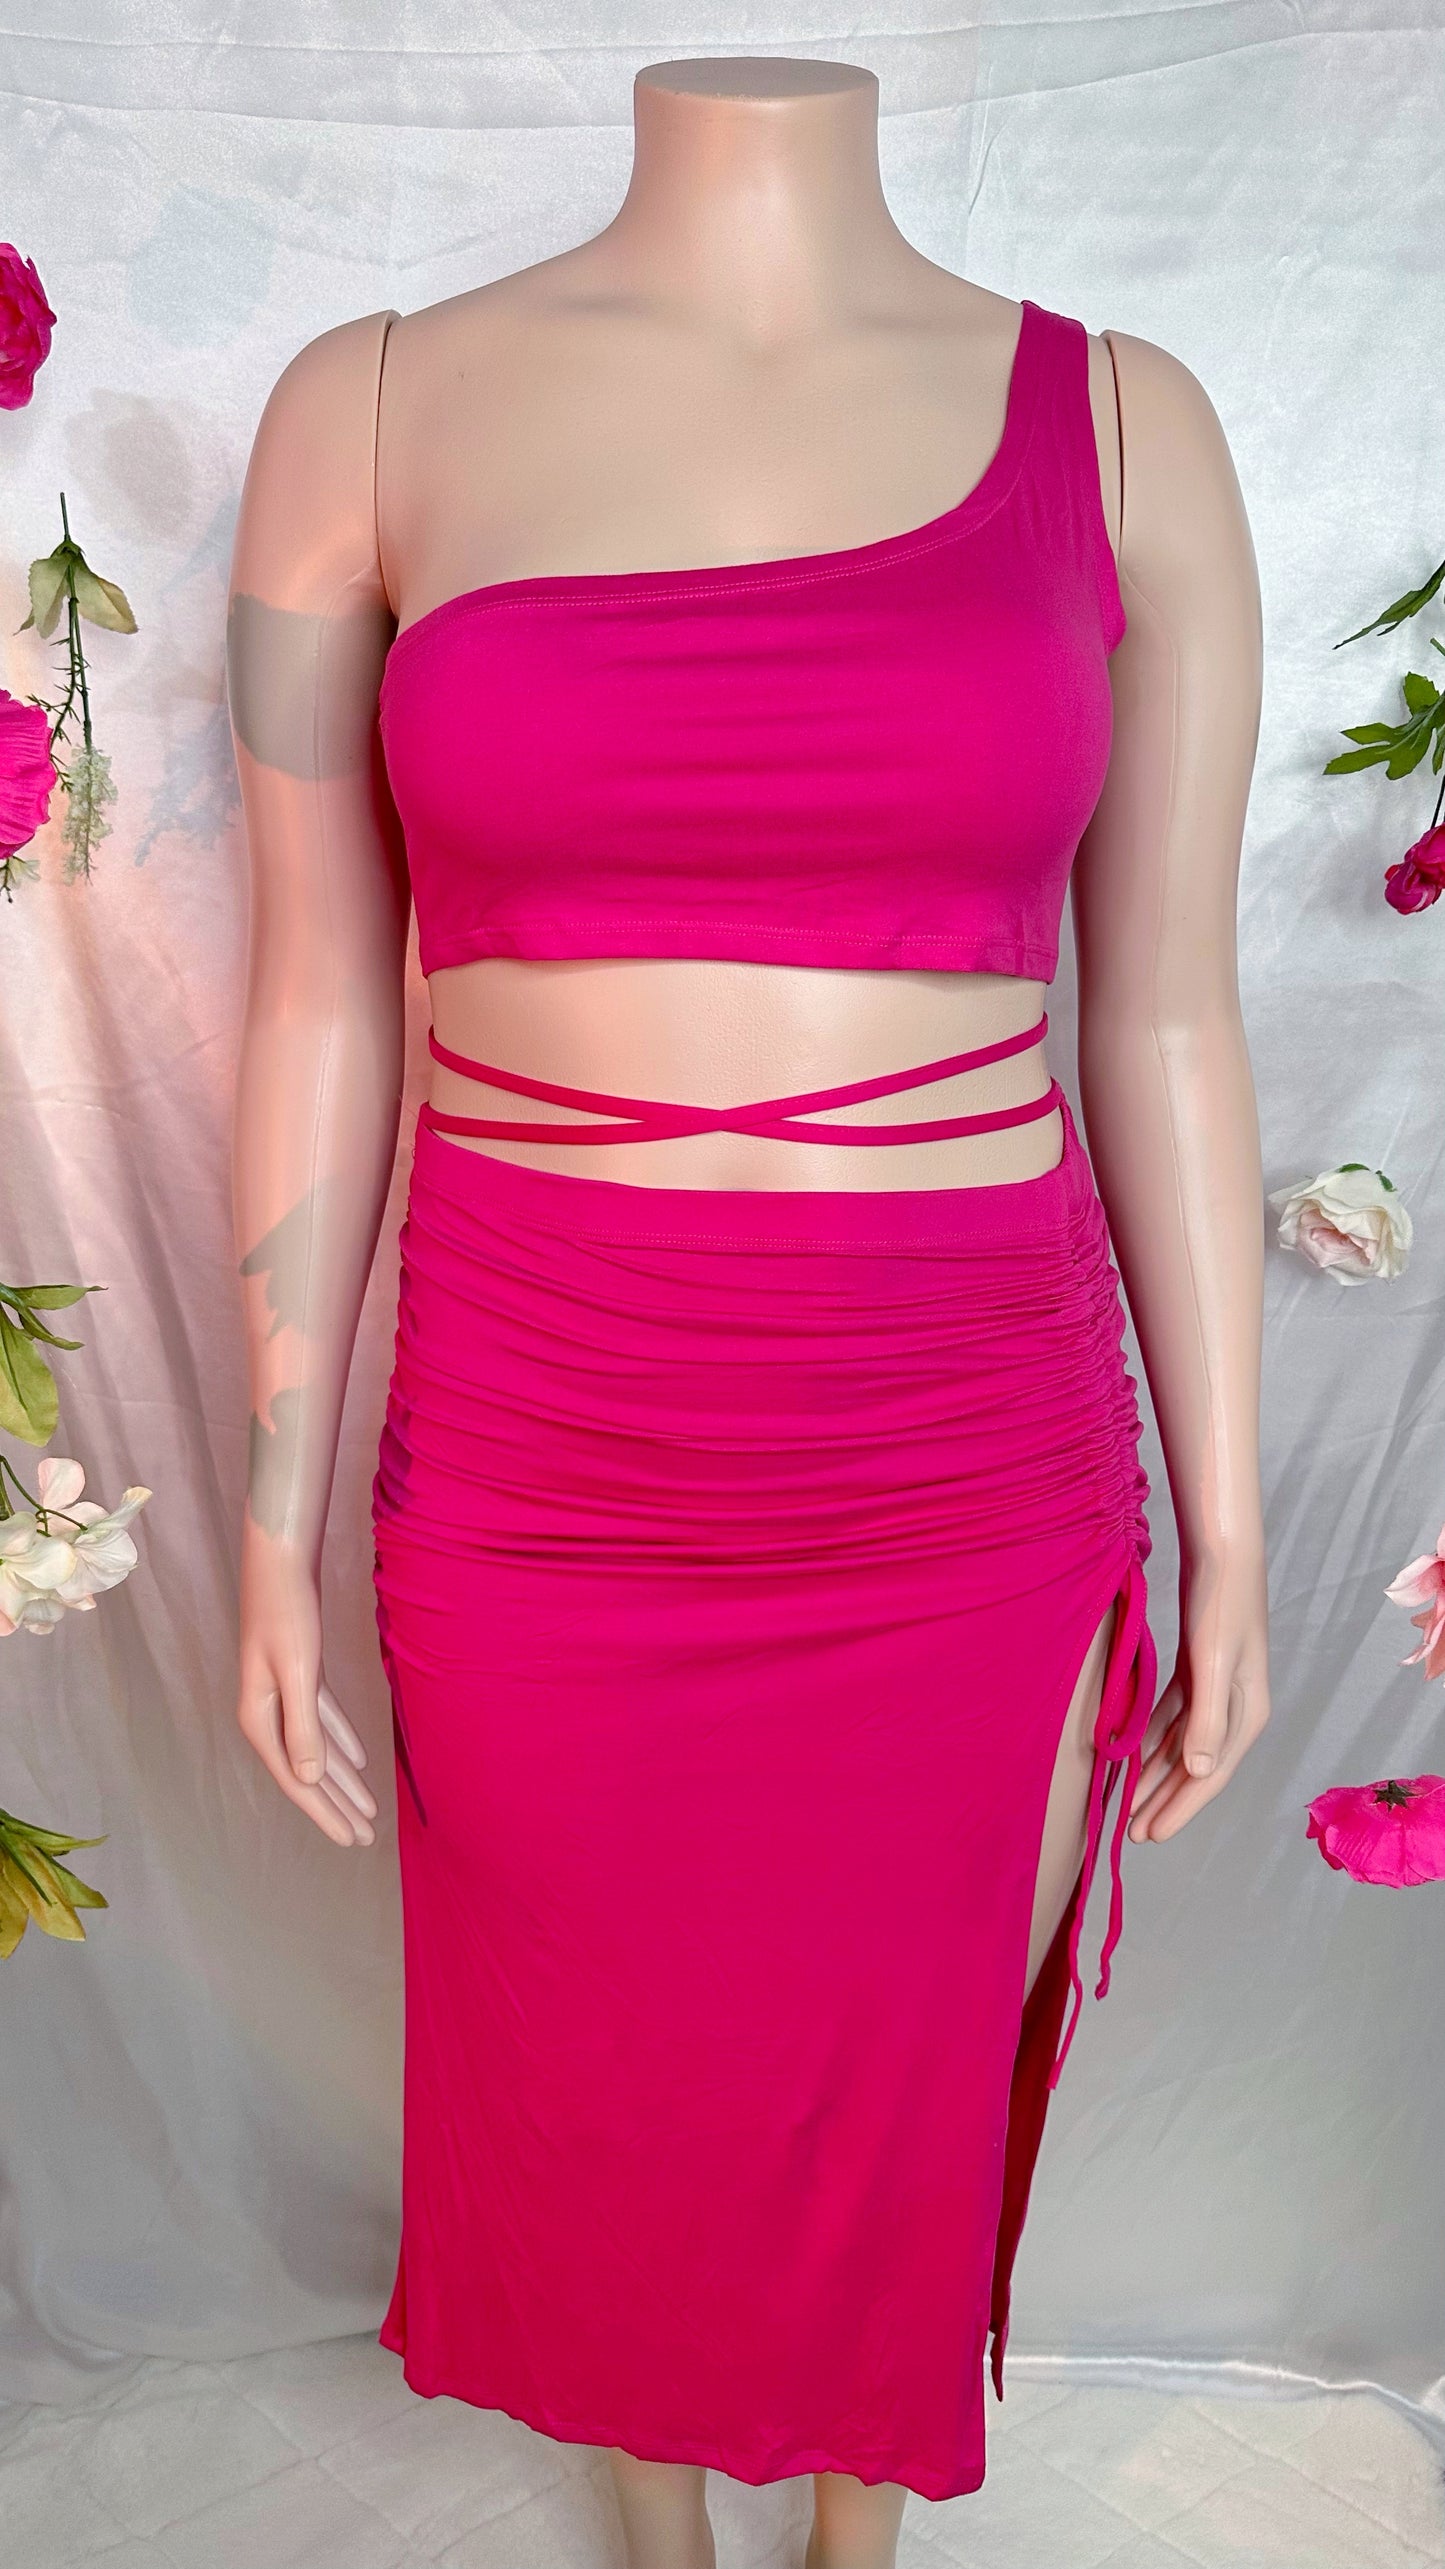 Lola Pink Skirt Set - Plus Size